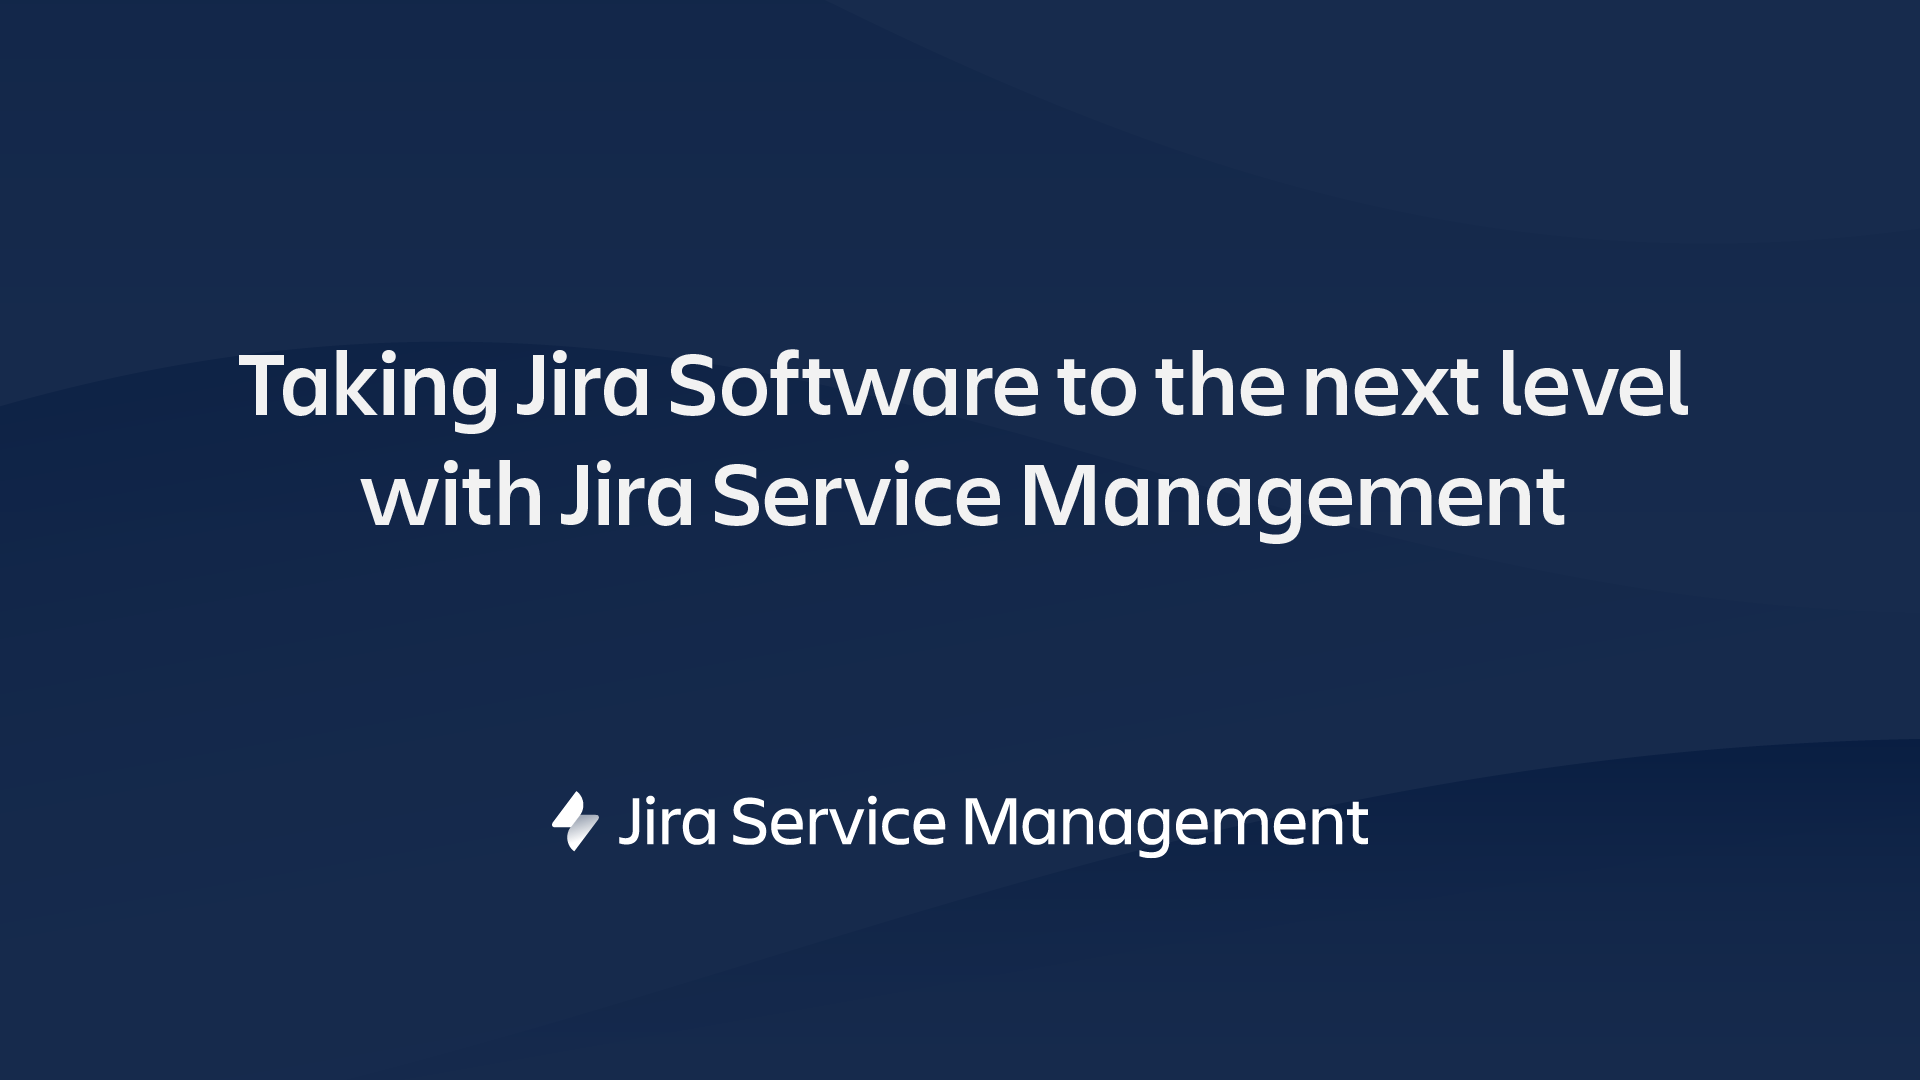 Jira Service Management video thumbnail